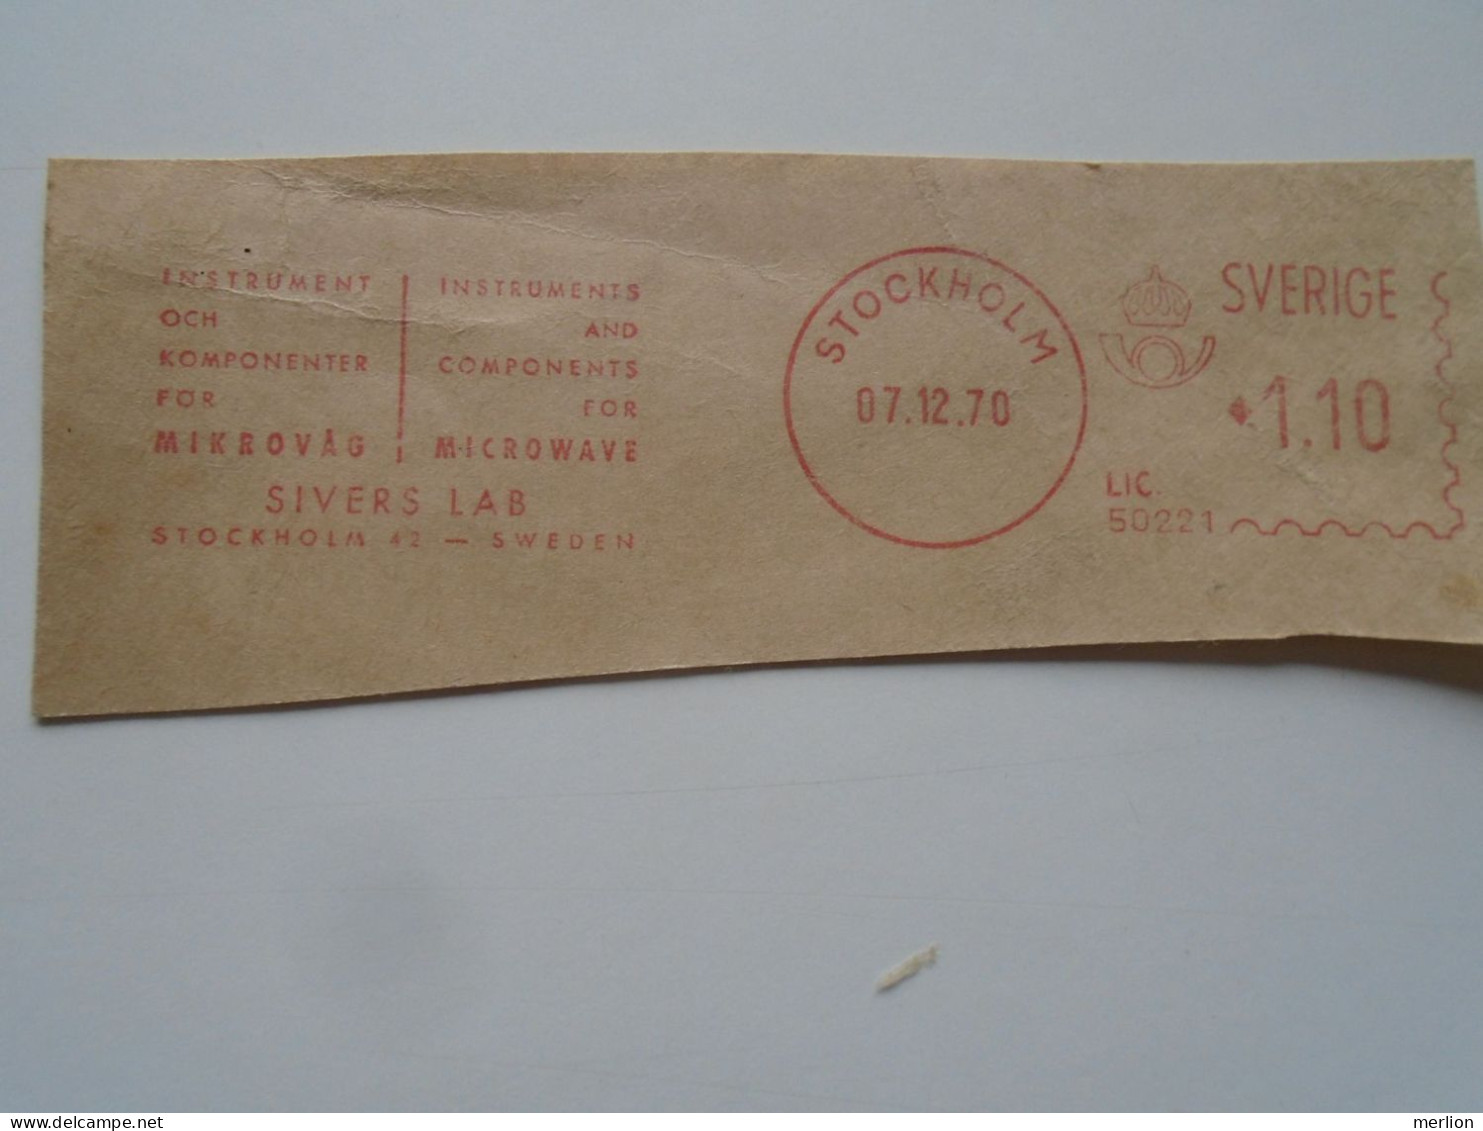 D200358  Red  Meter Stamp Cut- EMA - Freistempel  -1970  Components Fro Microwave   -Sweden  Stockholm  -Electro - Viñetas De Franqueo [ATM]